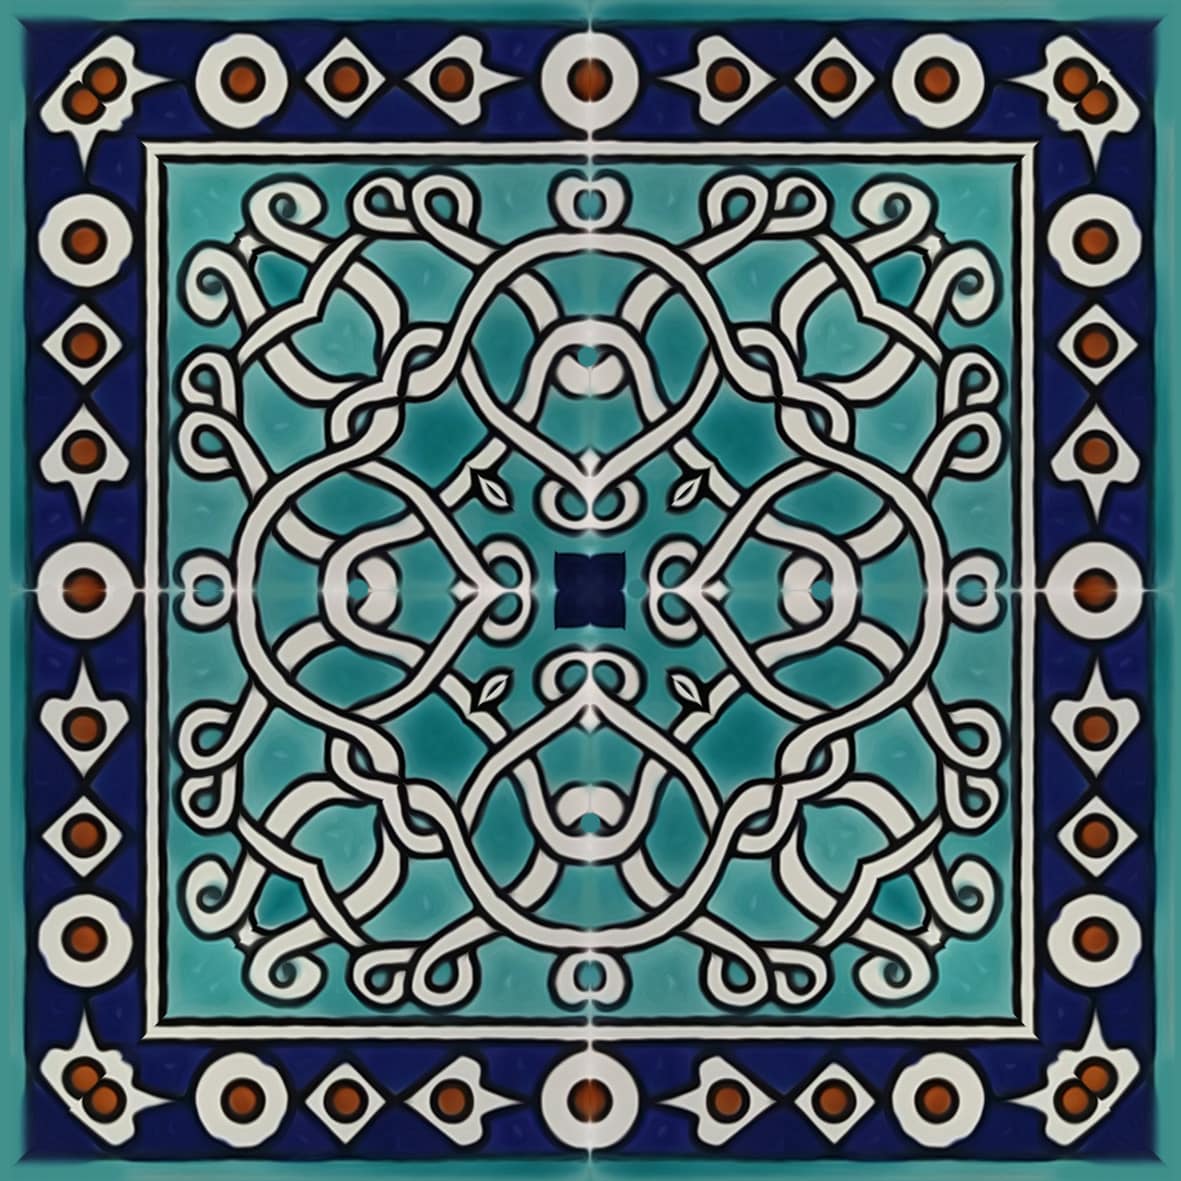 Hishams light blue ceramic tile pattern